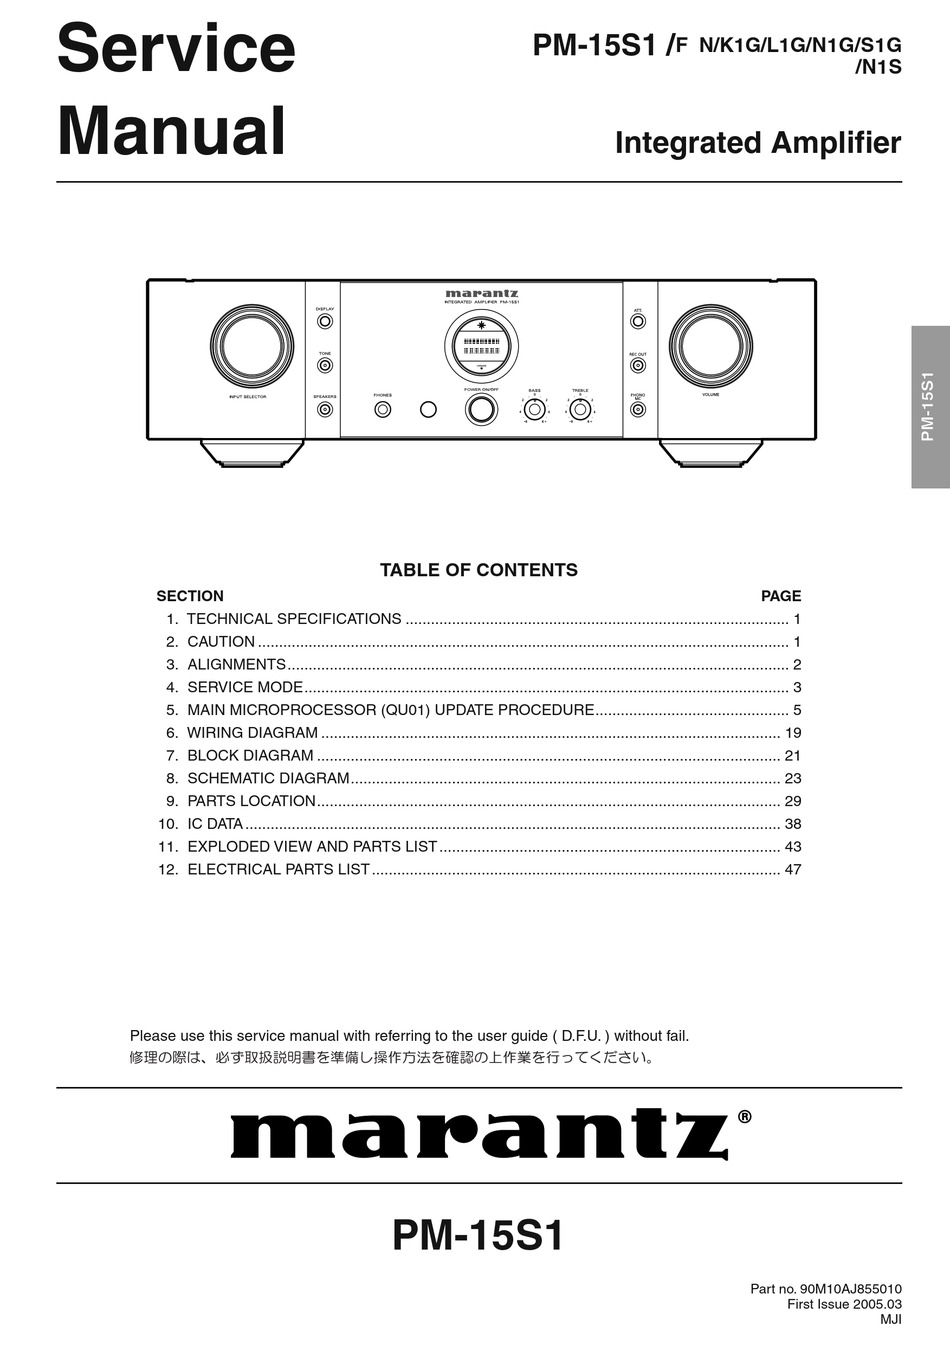 repetier server manual pdf